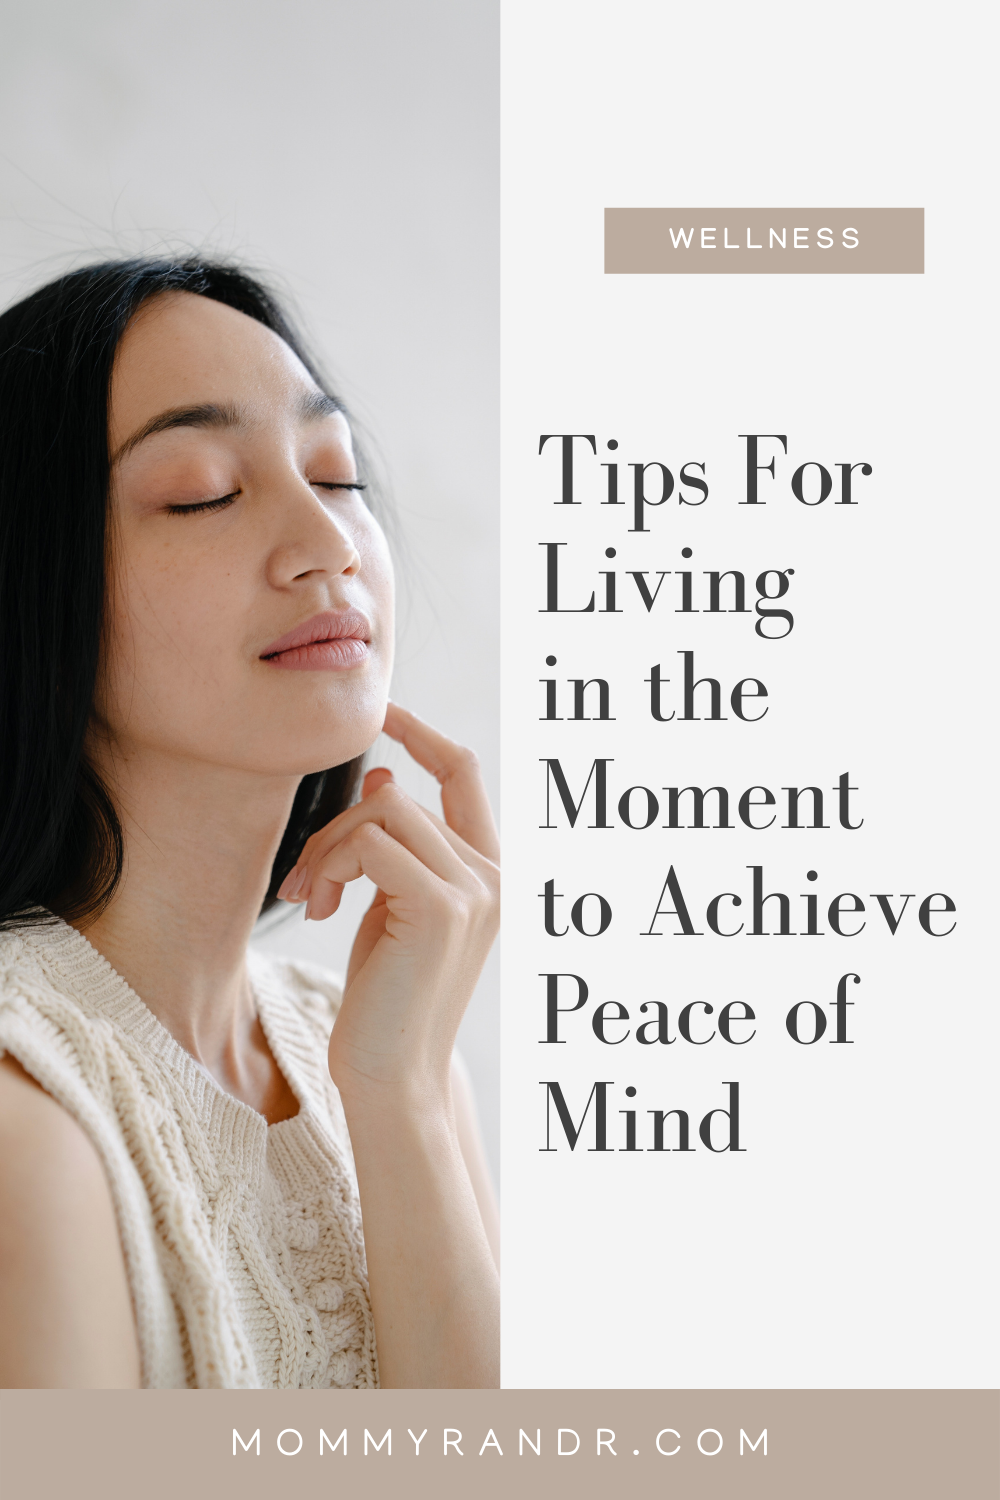 Achieve Peace of Mind mommyrandr